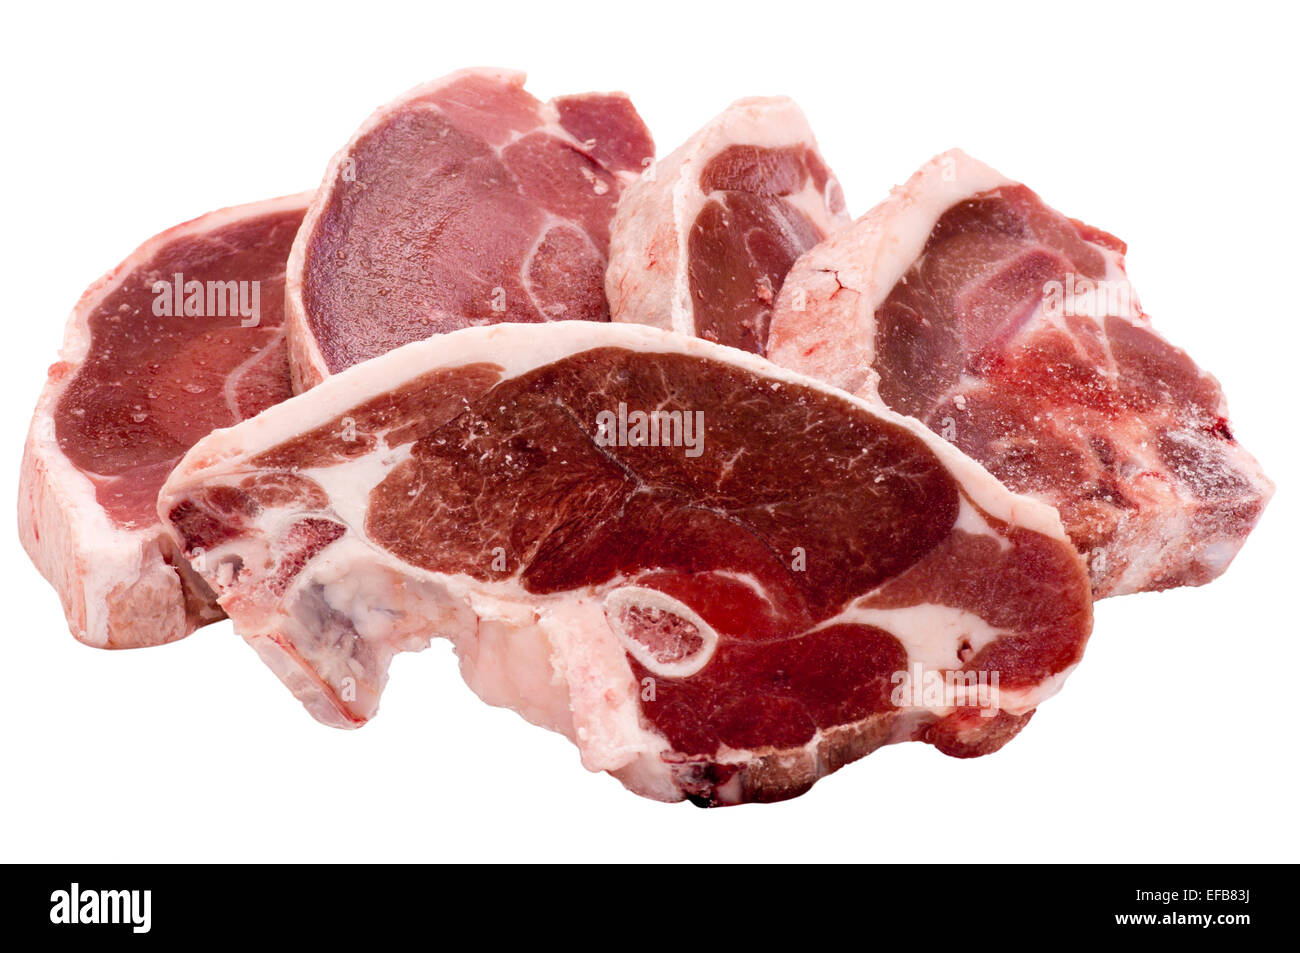 Raw lamb tail fat on wooden board Stock Photo - Alamy